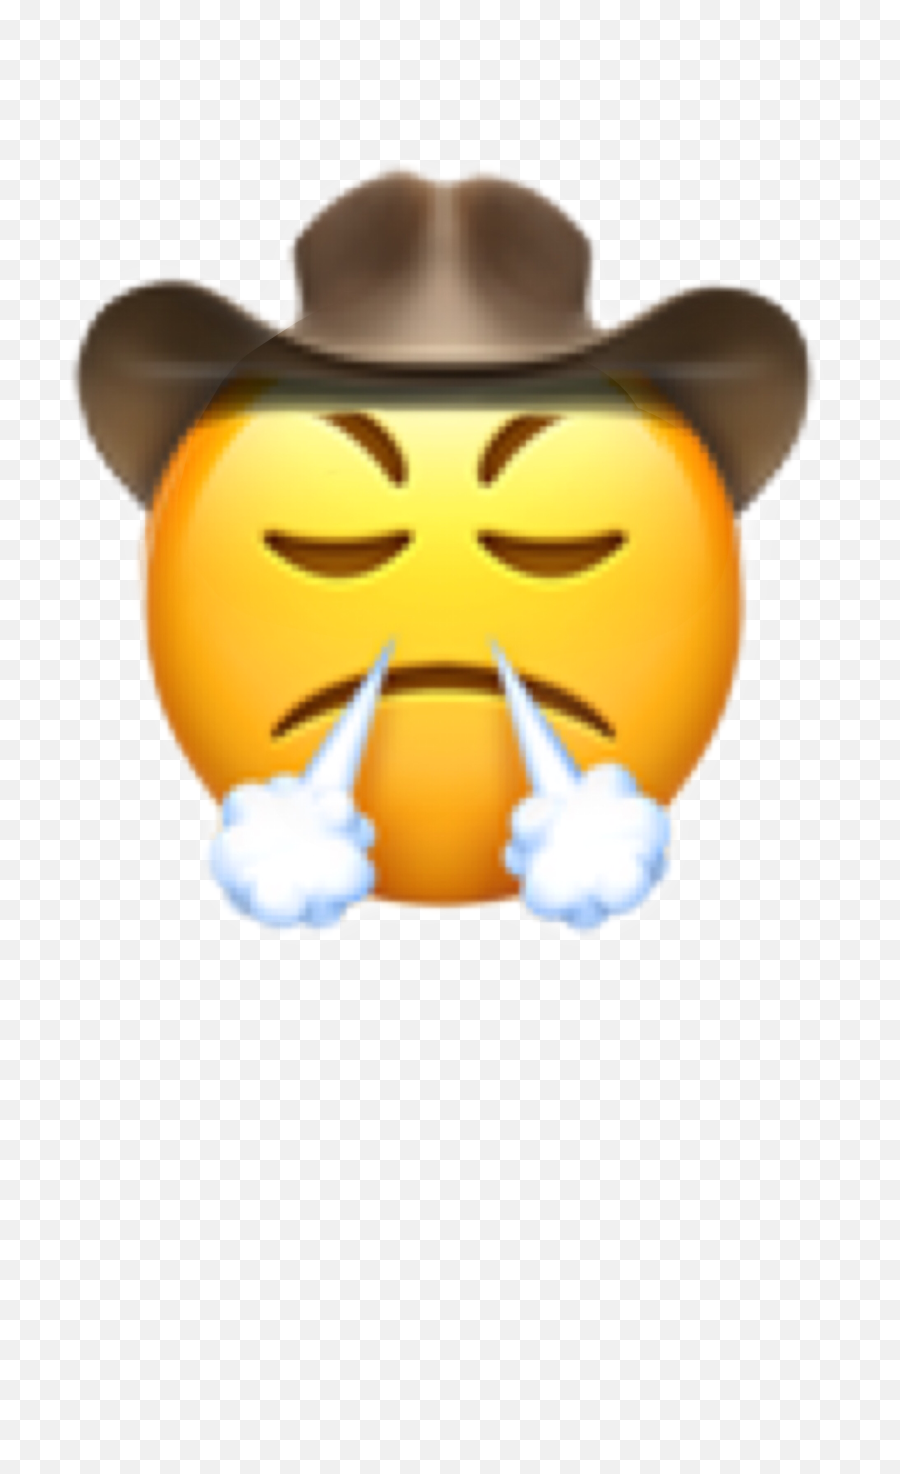 Cowboy Cowboyemoji Yeehaw Frustrated Emoji Freet - Face With Steam From Nose Emoji,Emoji Frustrated